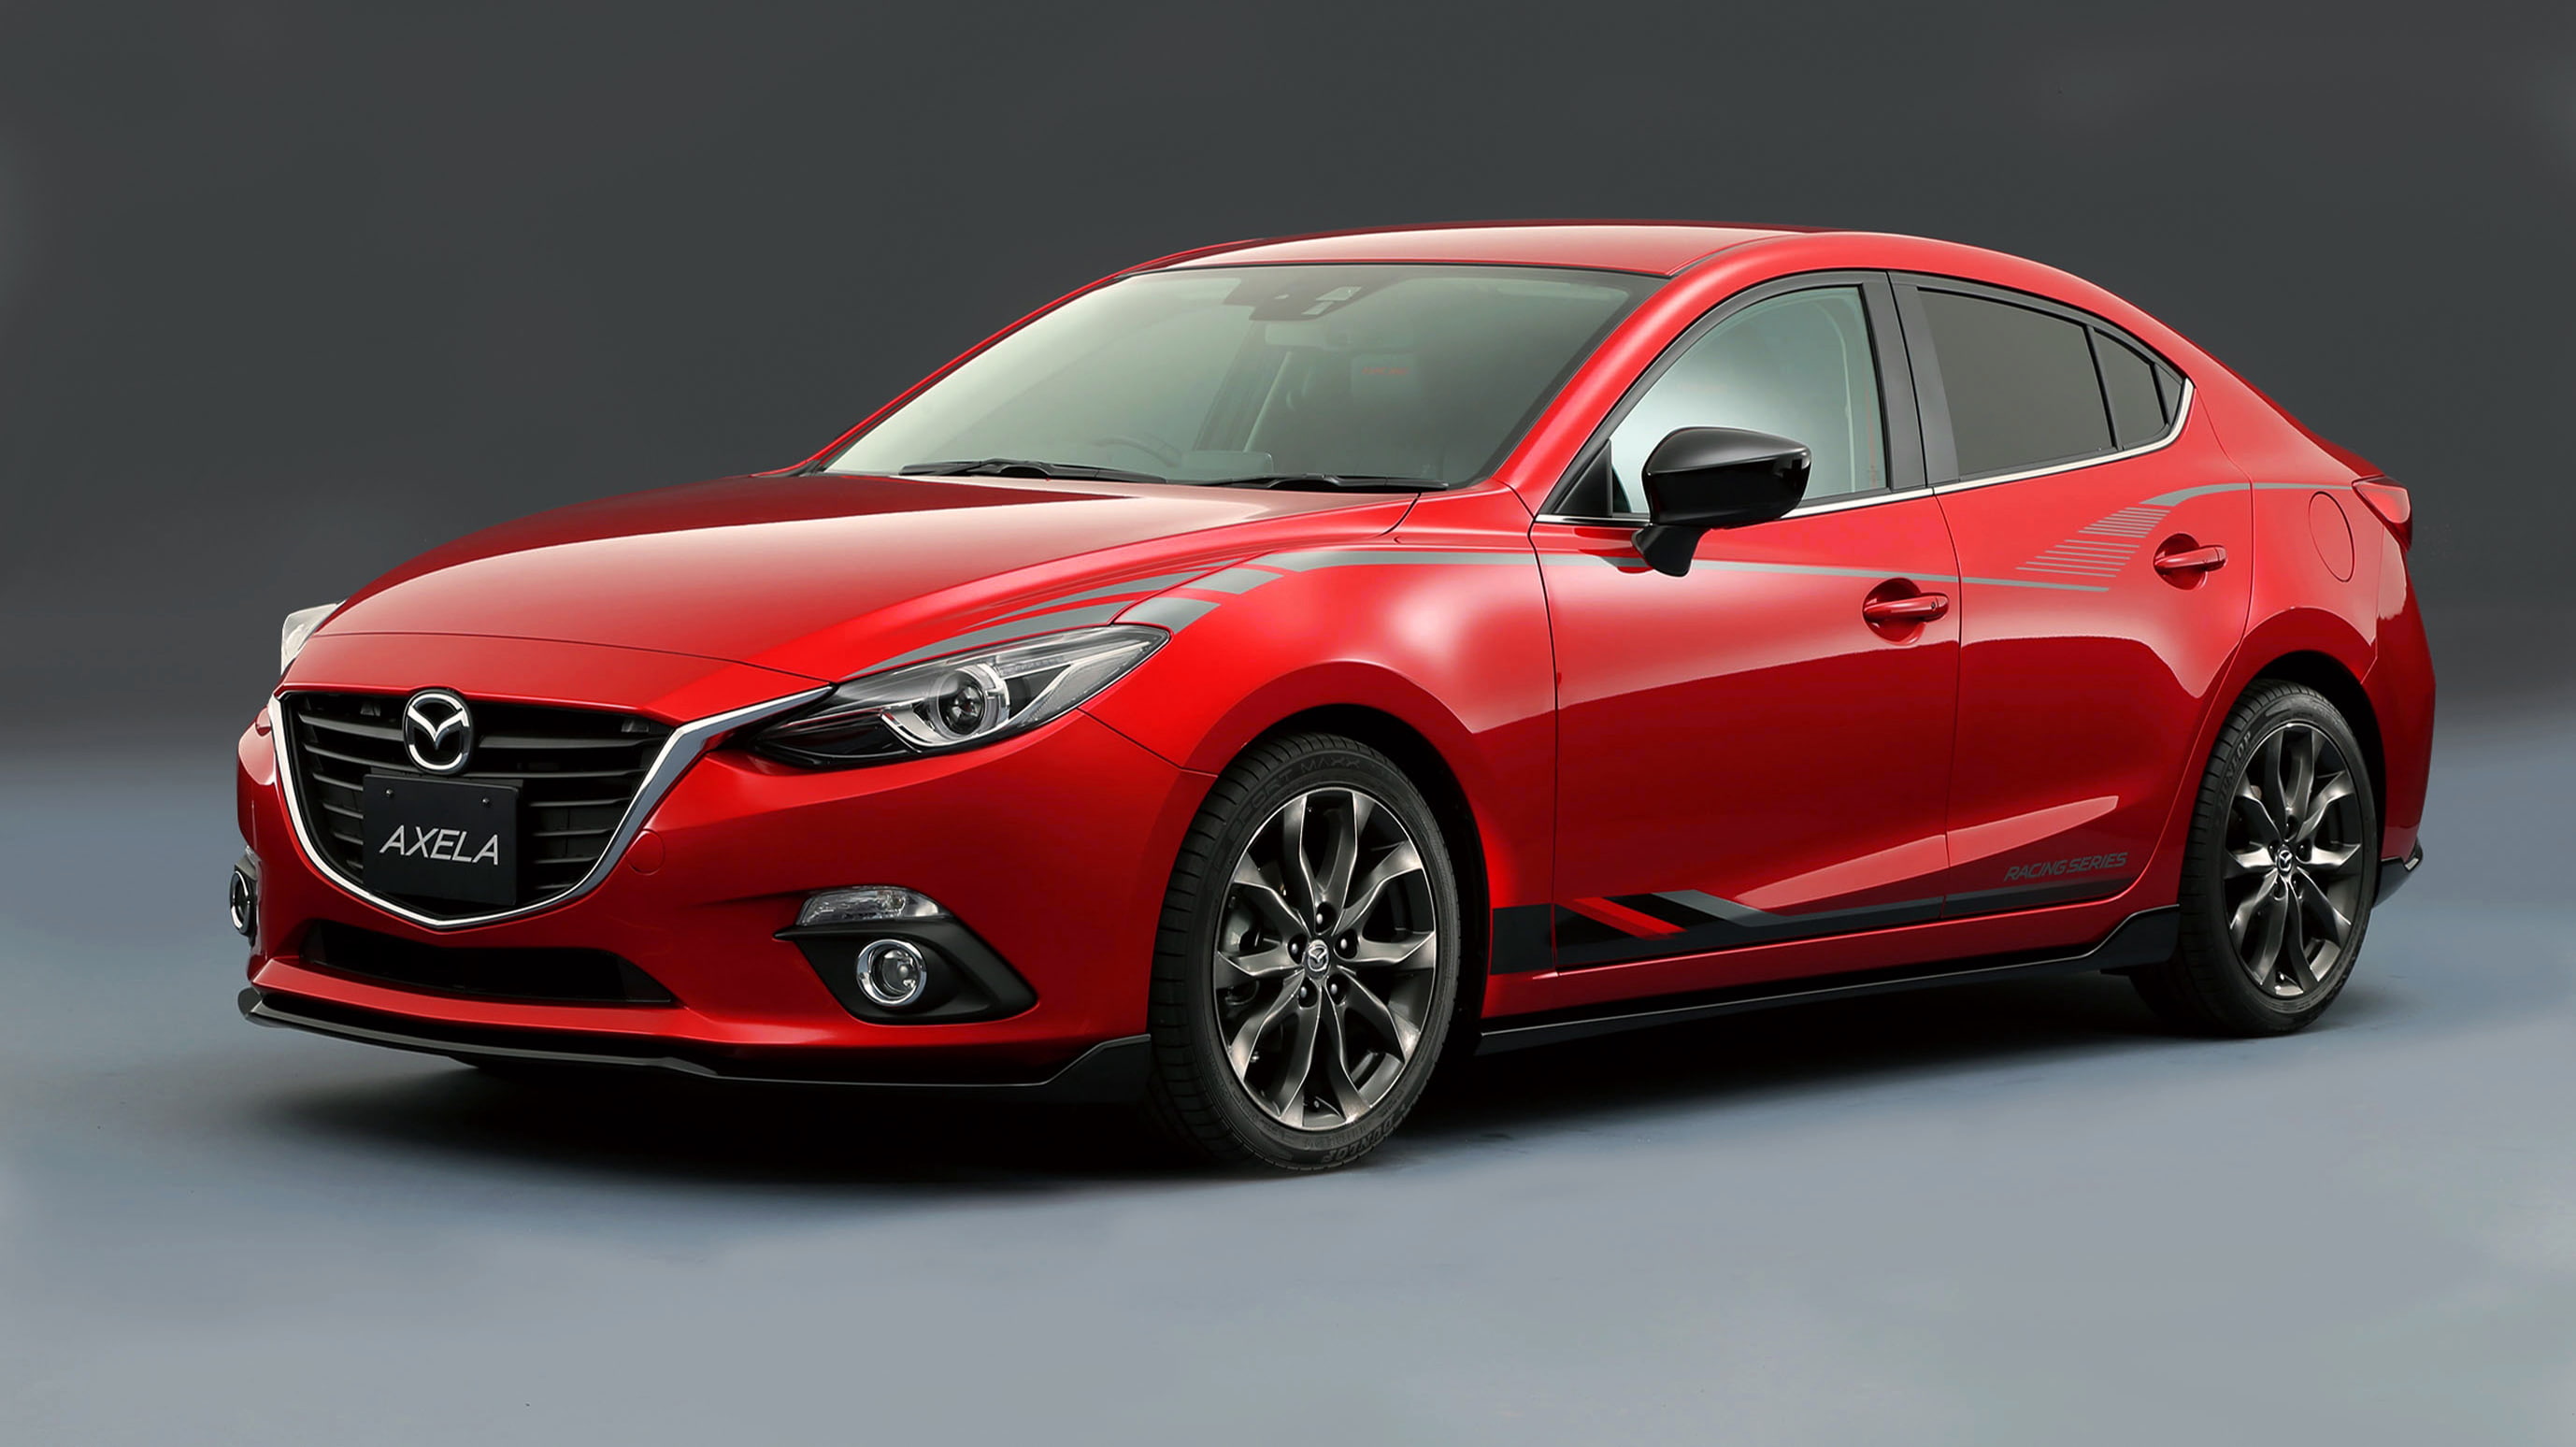 red Mazda sedan, Concept, Asean, Axela, car, motor vehicle, mode of transportation